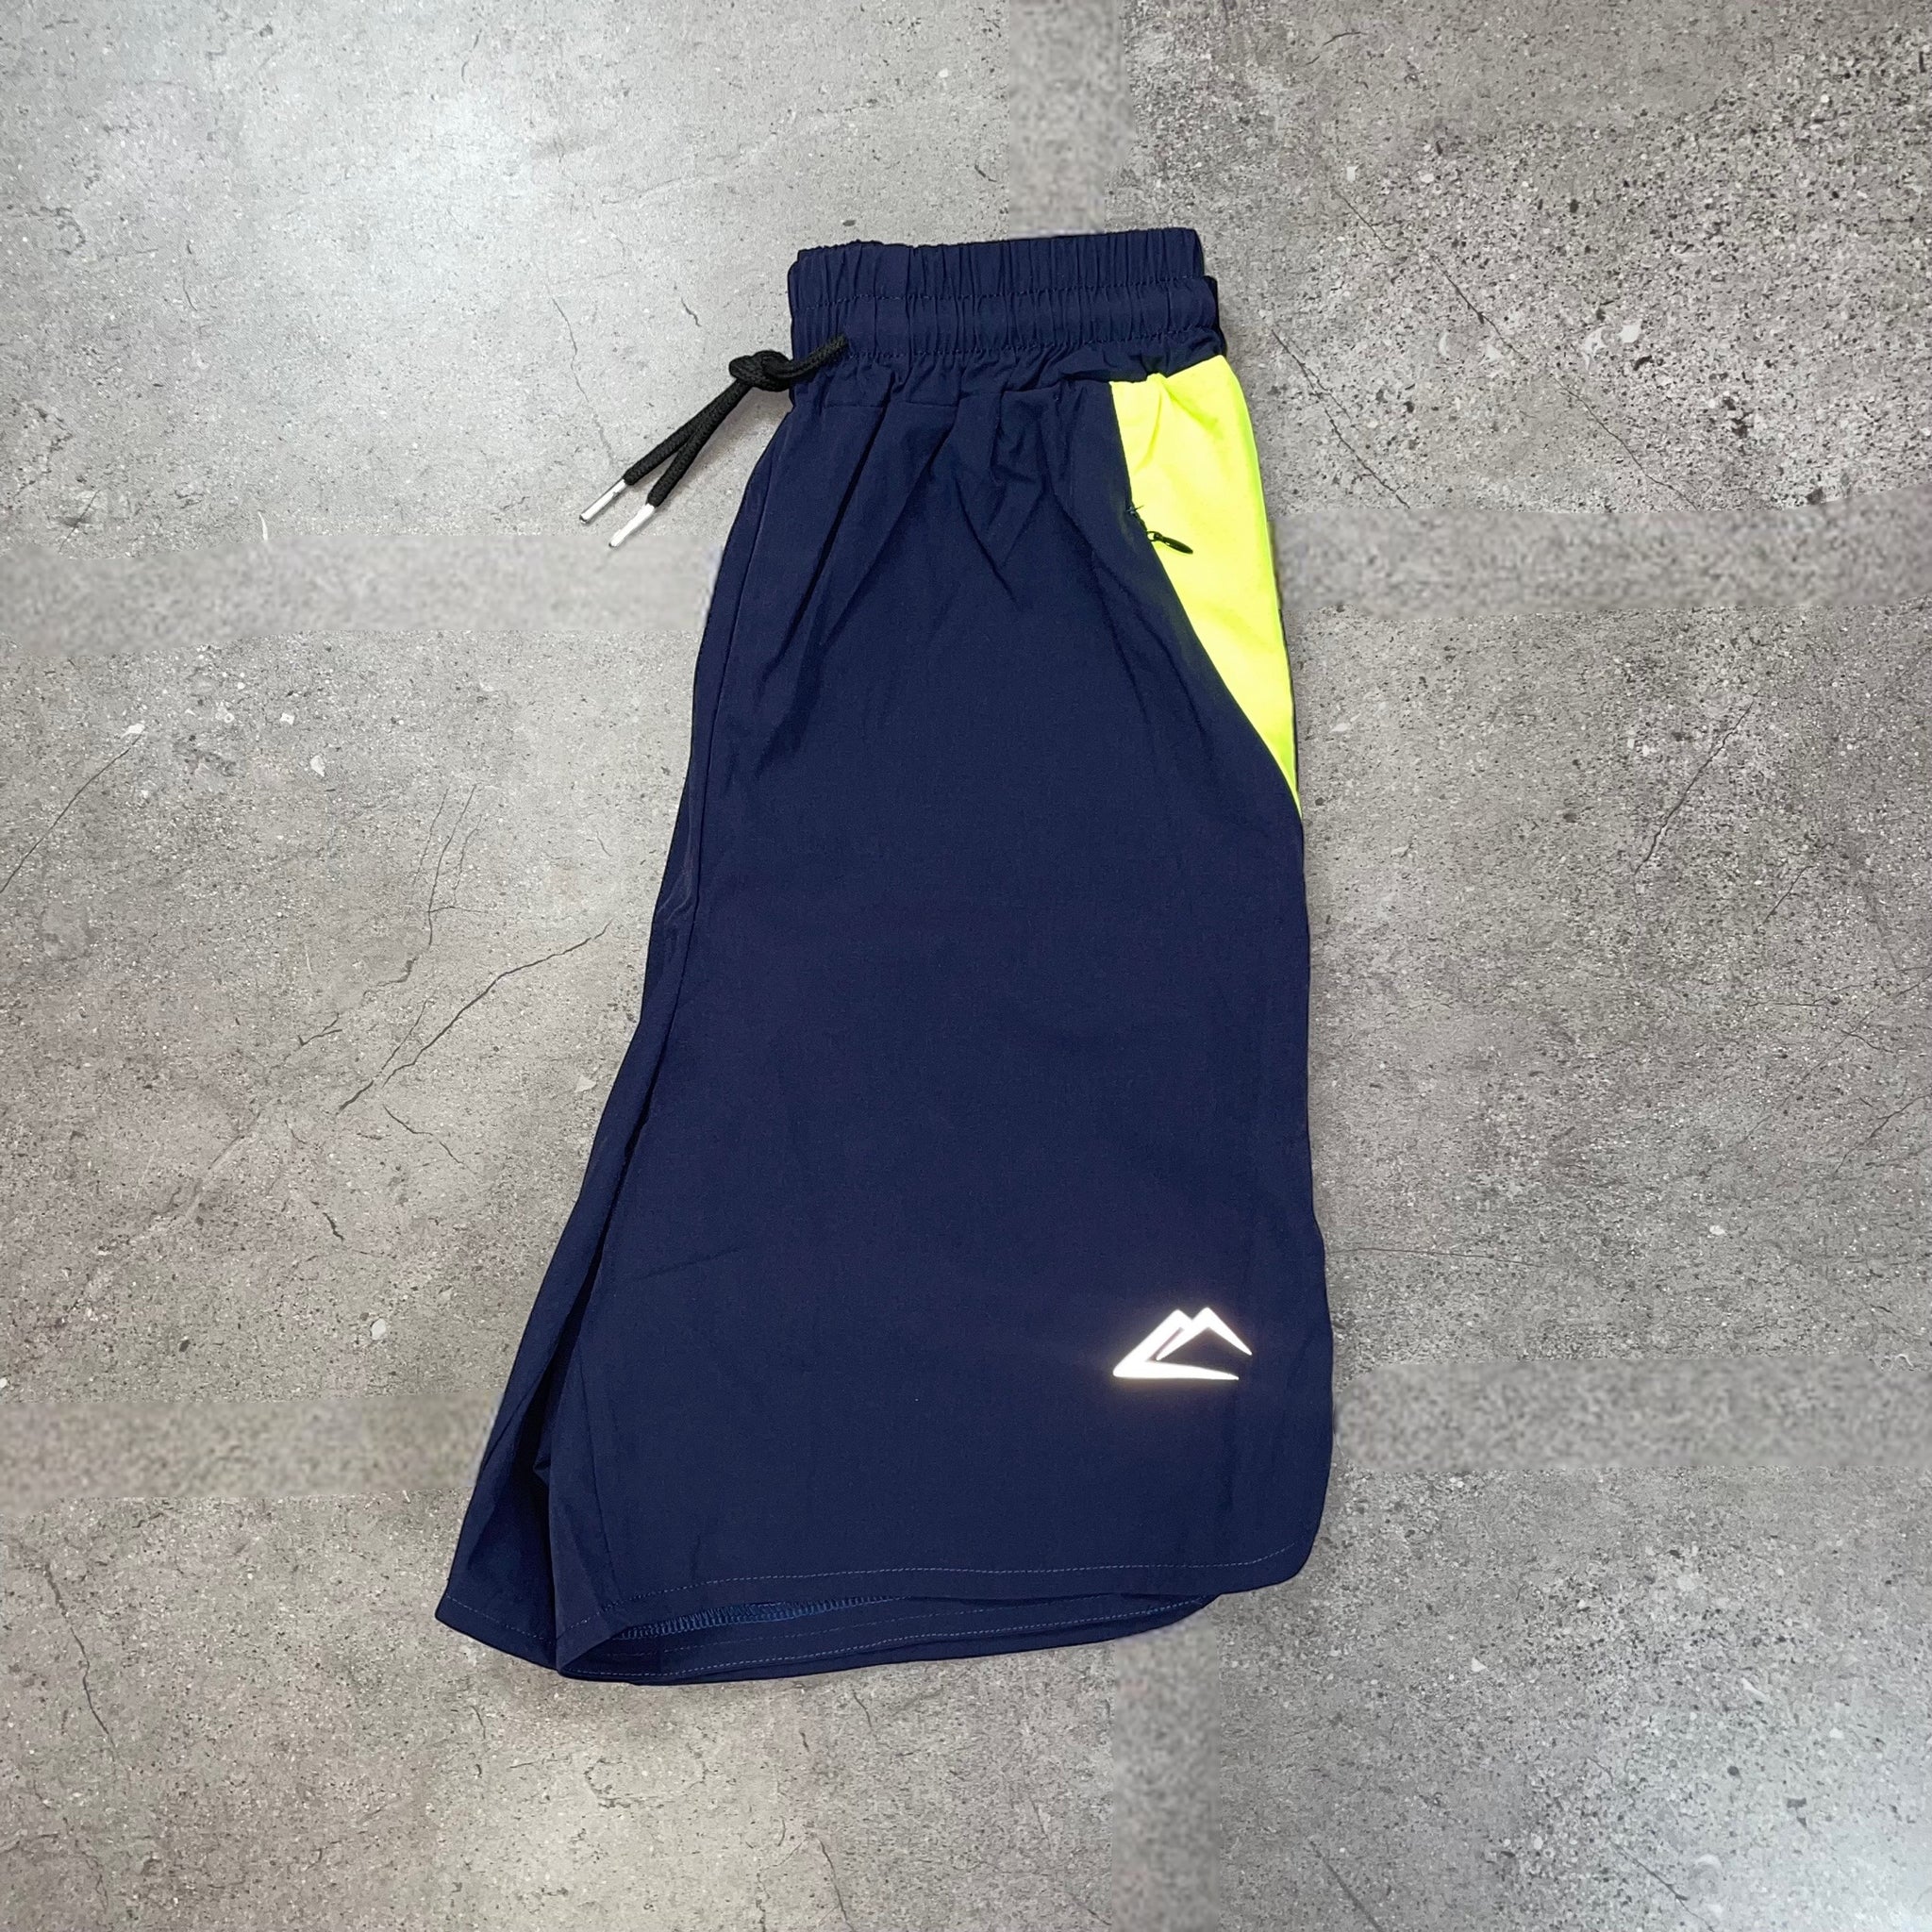 ActiveLine Terra Shorts - Navy/Neon Yellow